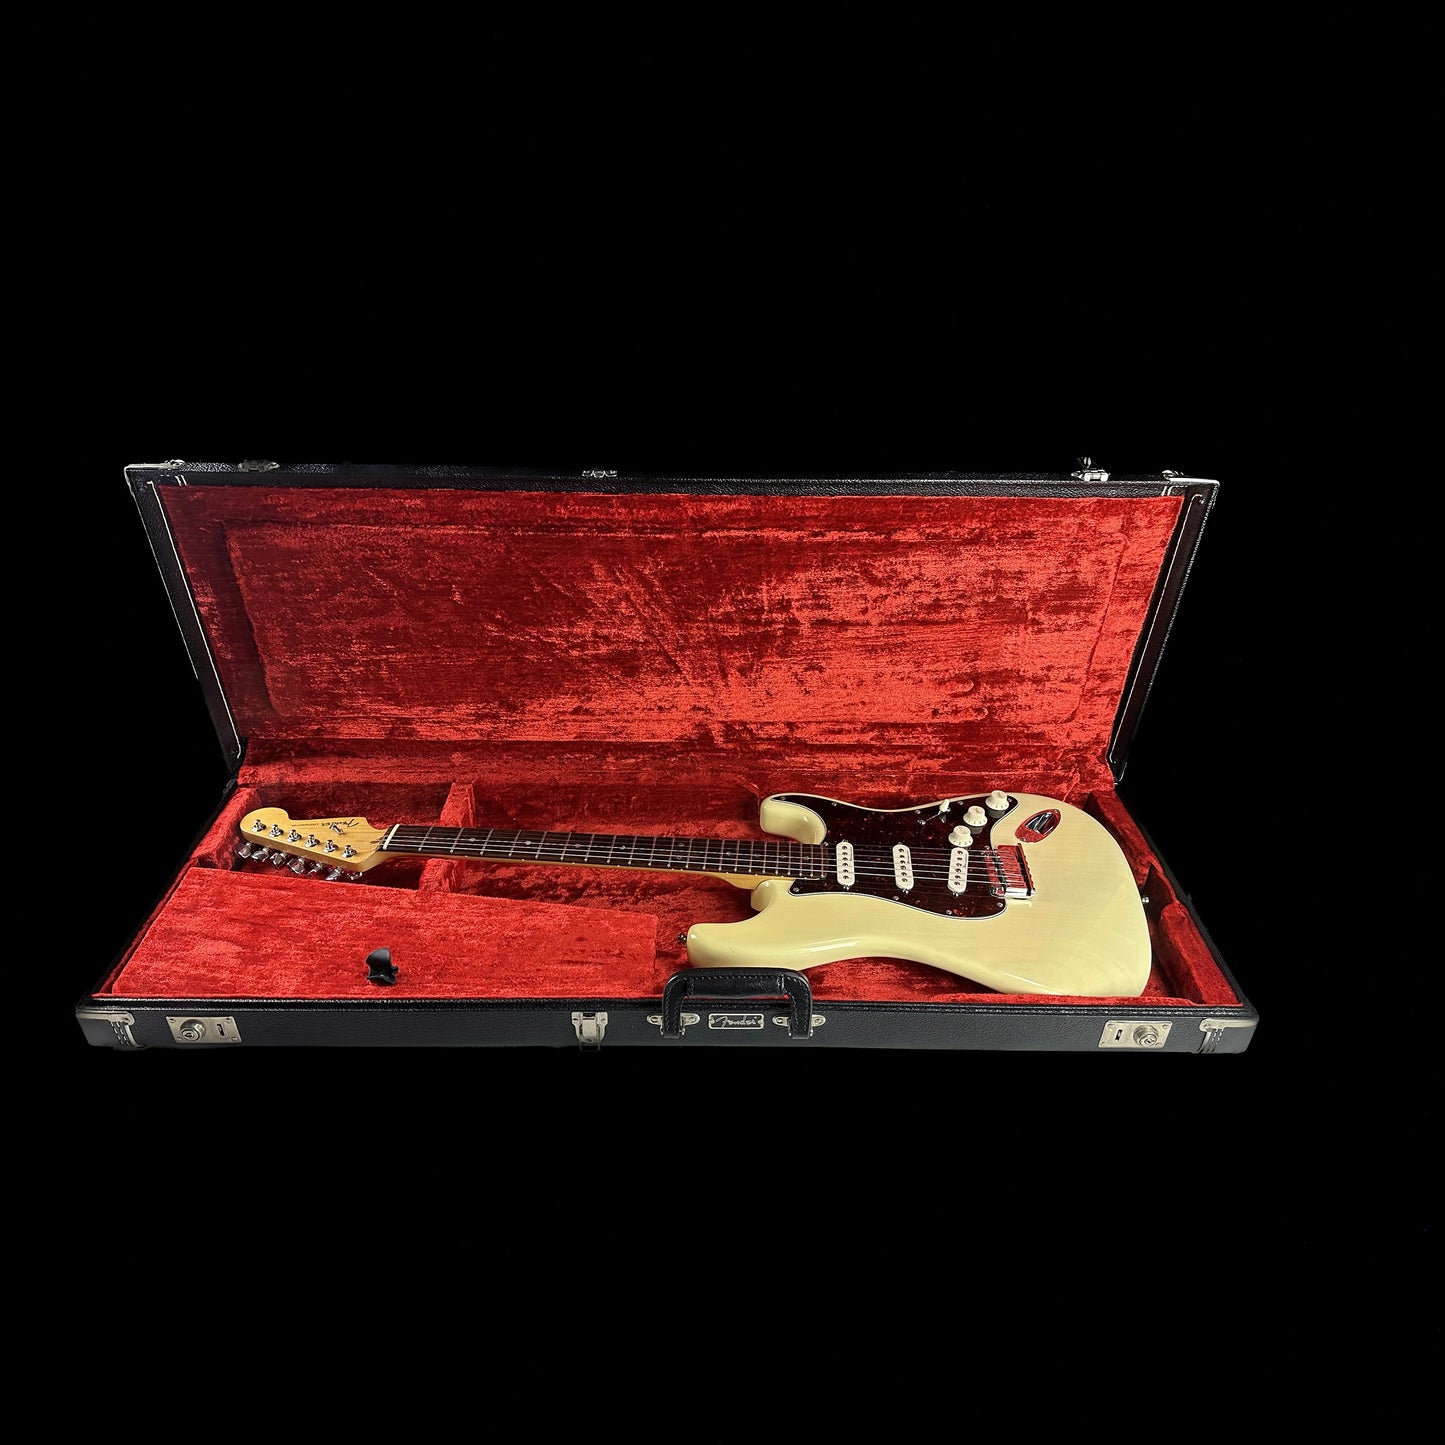 Used 2000 Fender American Deluxe Stratocaster White Blonde w/case TSU14840